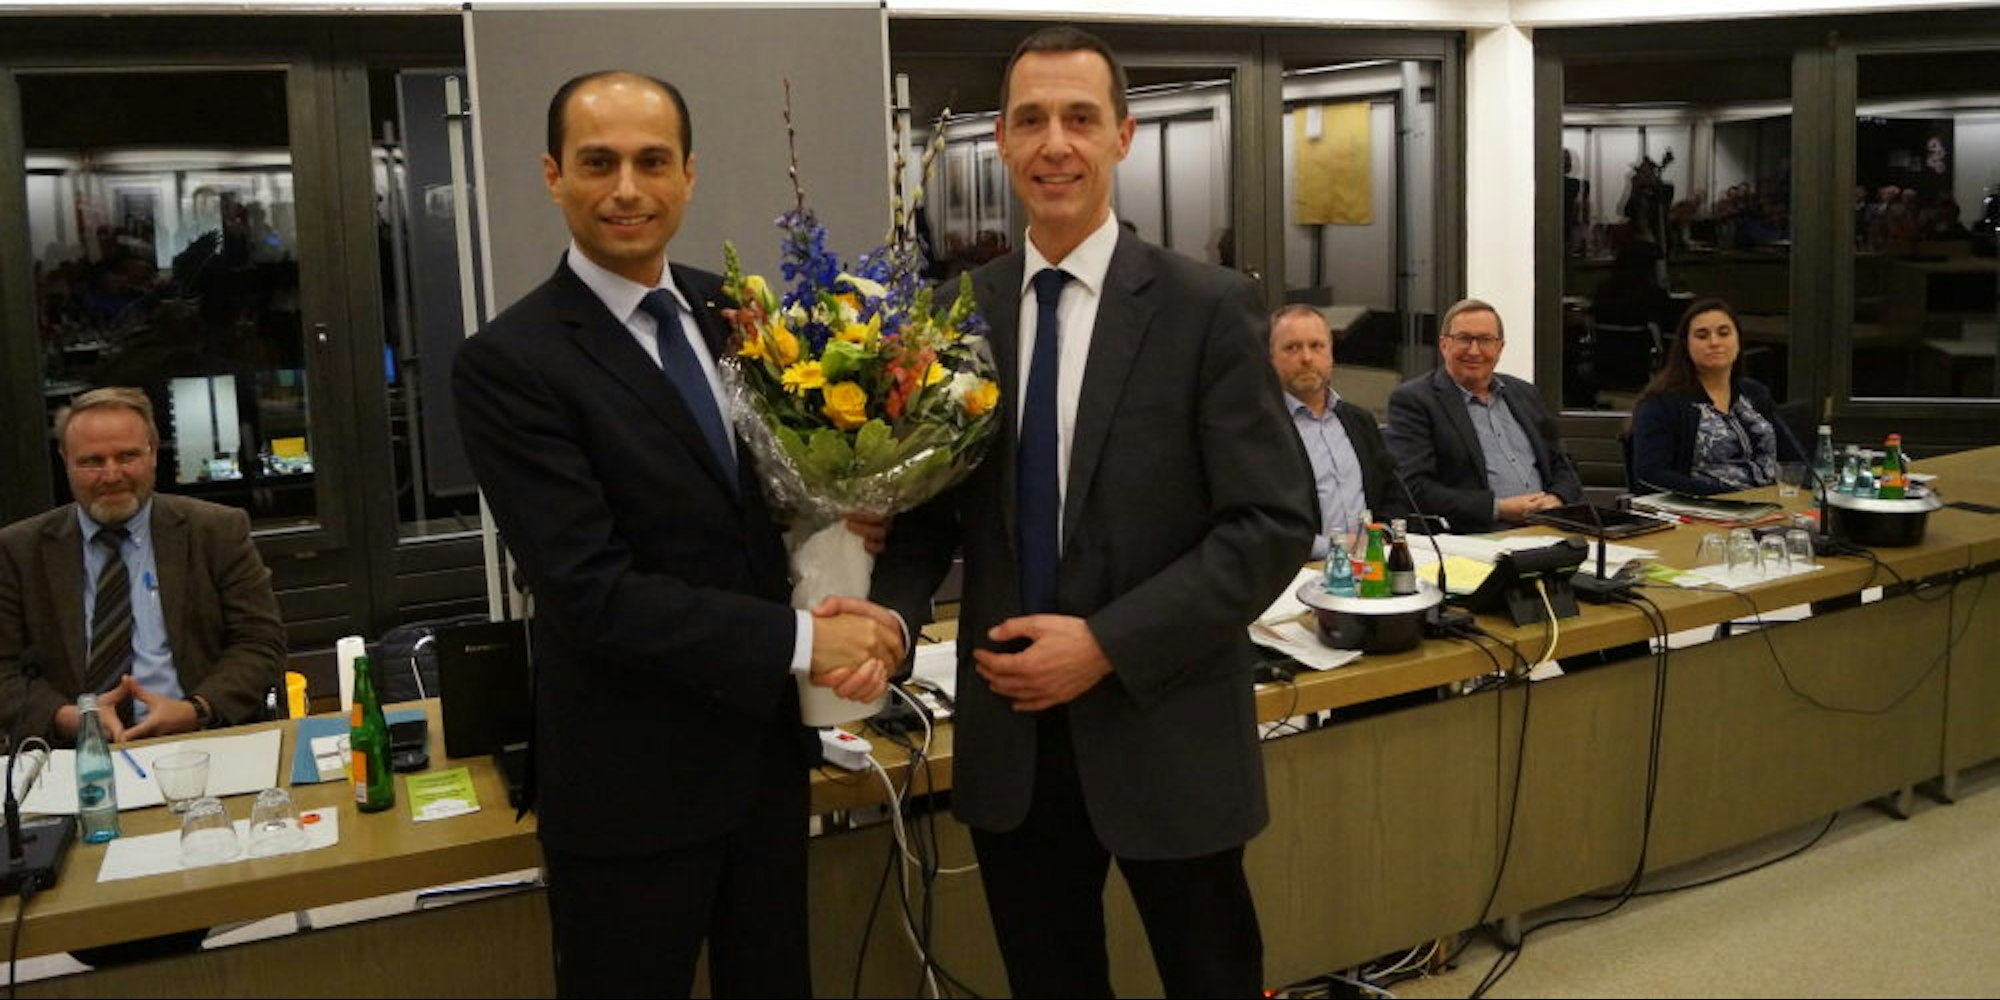 Bürgermeister Dieter Spürck (r.) gratulierte dem neuen 1. Beigeordneten Mahmoud Al-Khatib (l.) nach der Wahl.